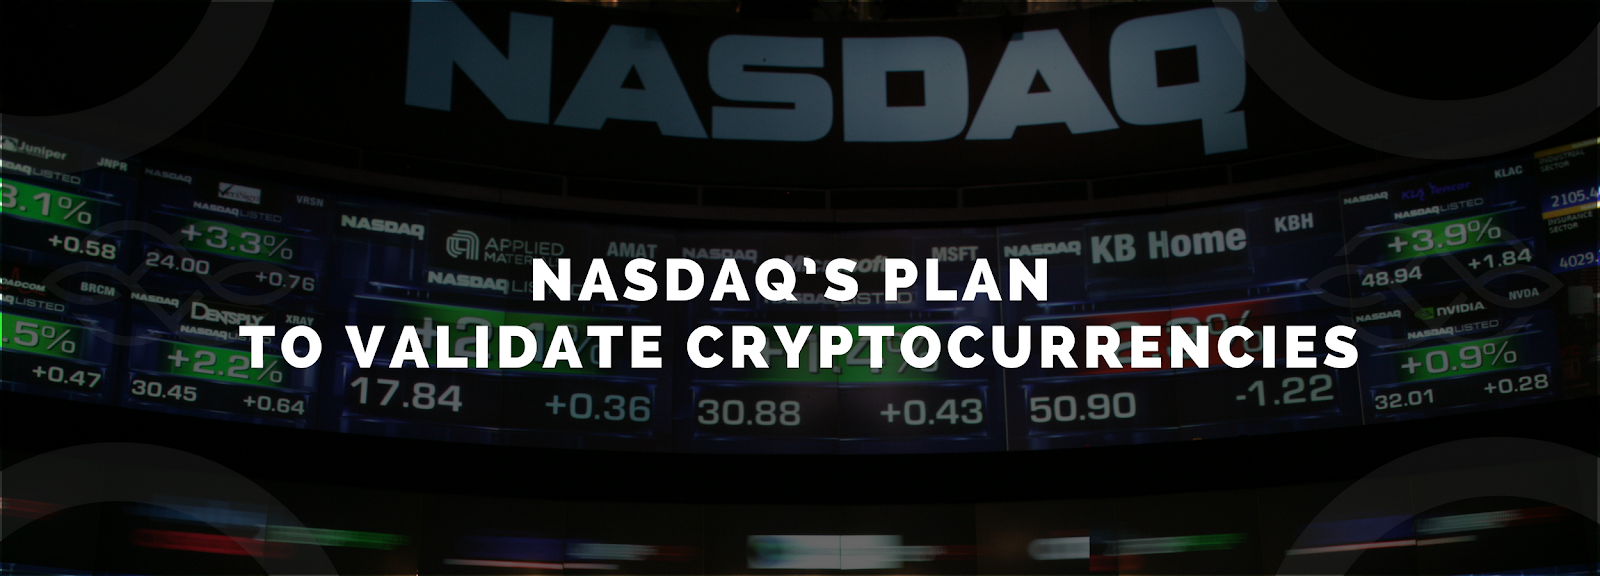 Nasdaq’s Plan to Validate Cryptocurrencies